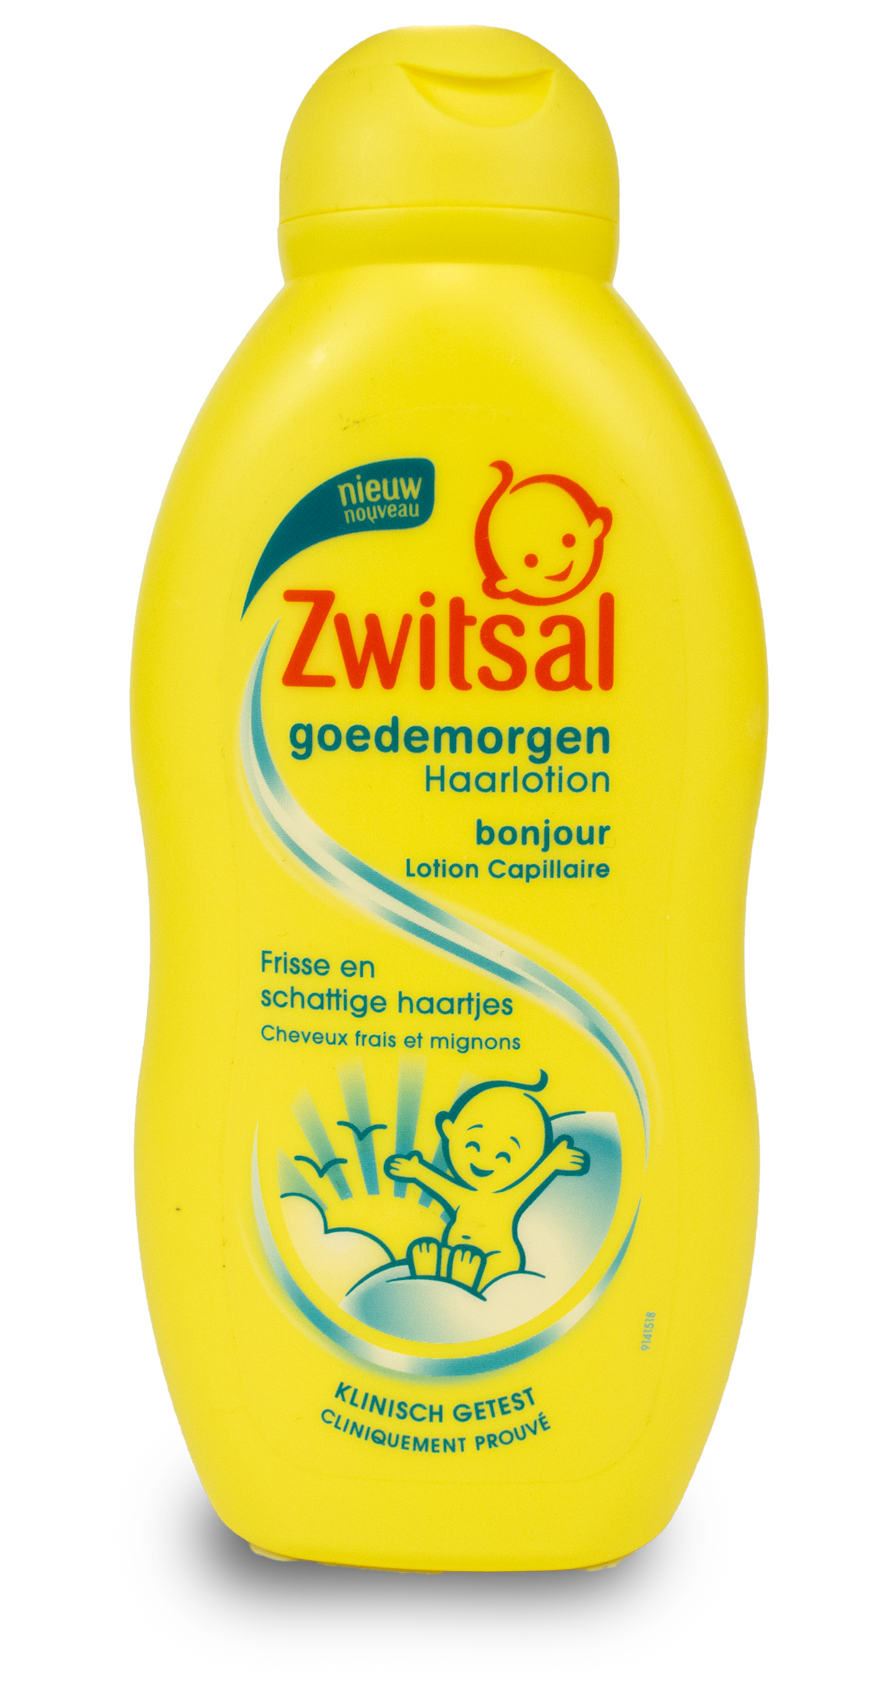 Zwitsal Good Morning Hair Lotion 200ml - The Dutch Shop